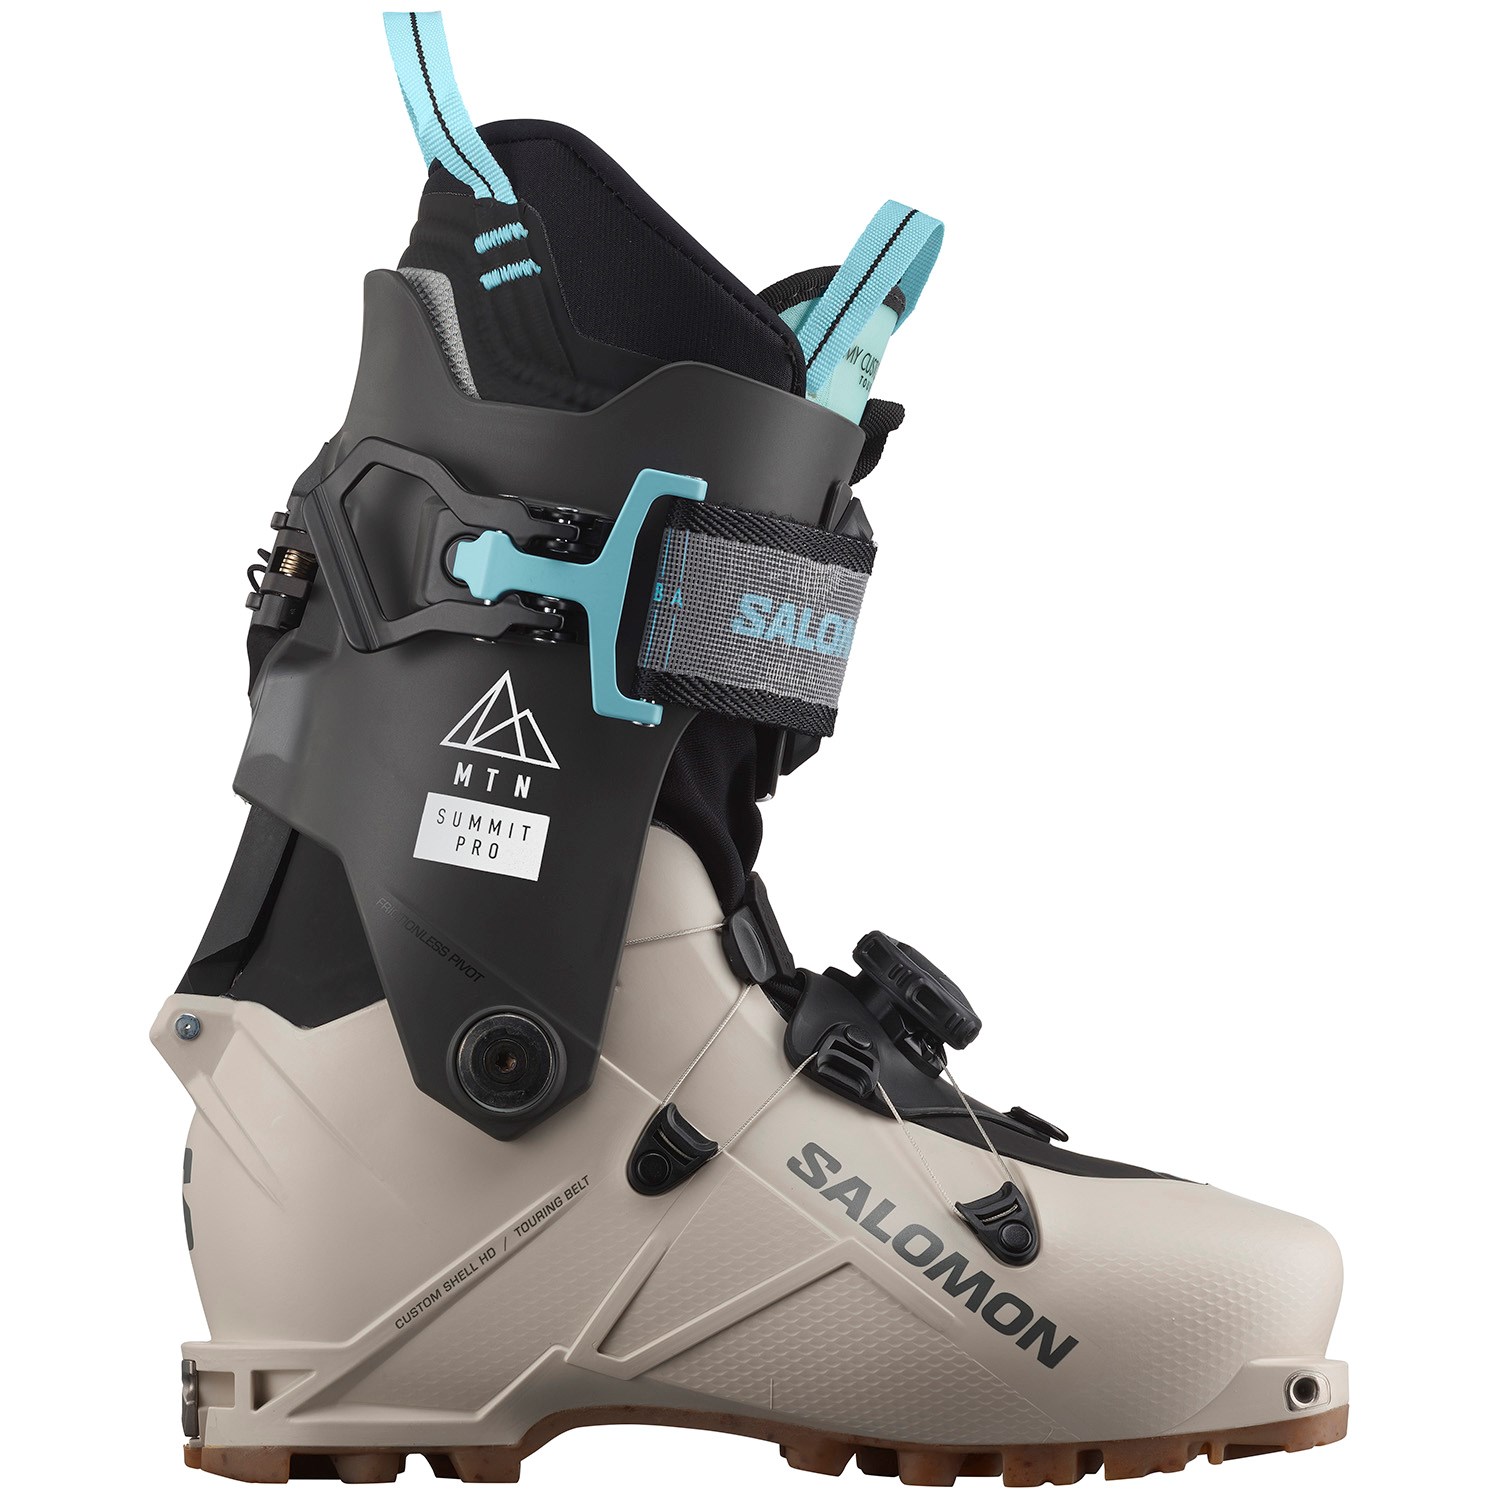 Горнолыжные ботинки Salomon MTN Summit Pro W Alpine Touring ботинки женские salomon mtn summit pro лыжные rainy day